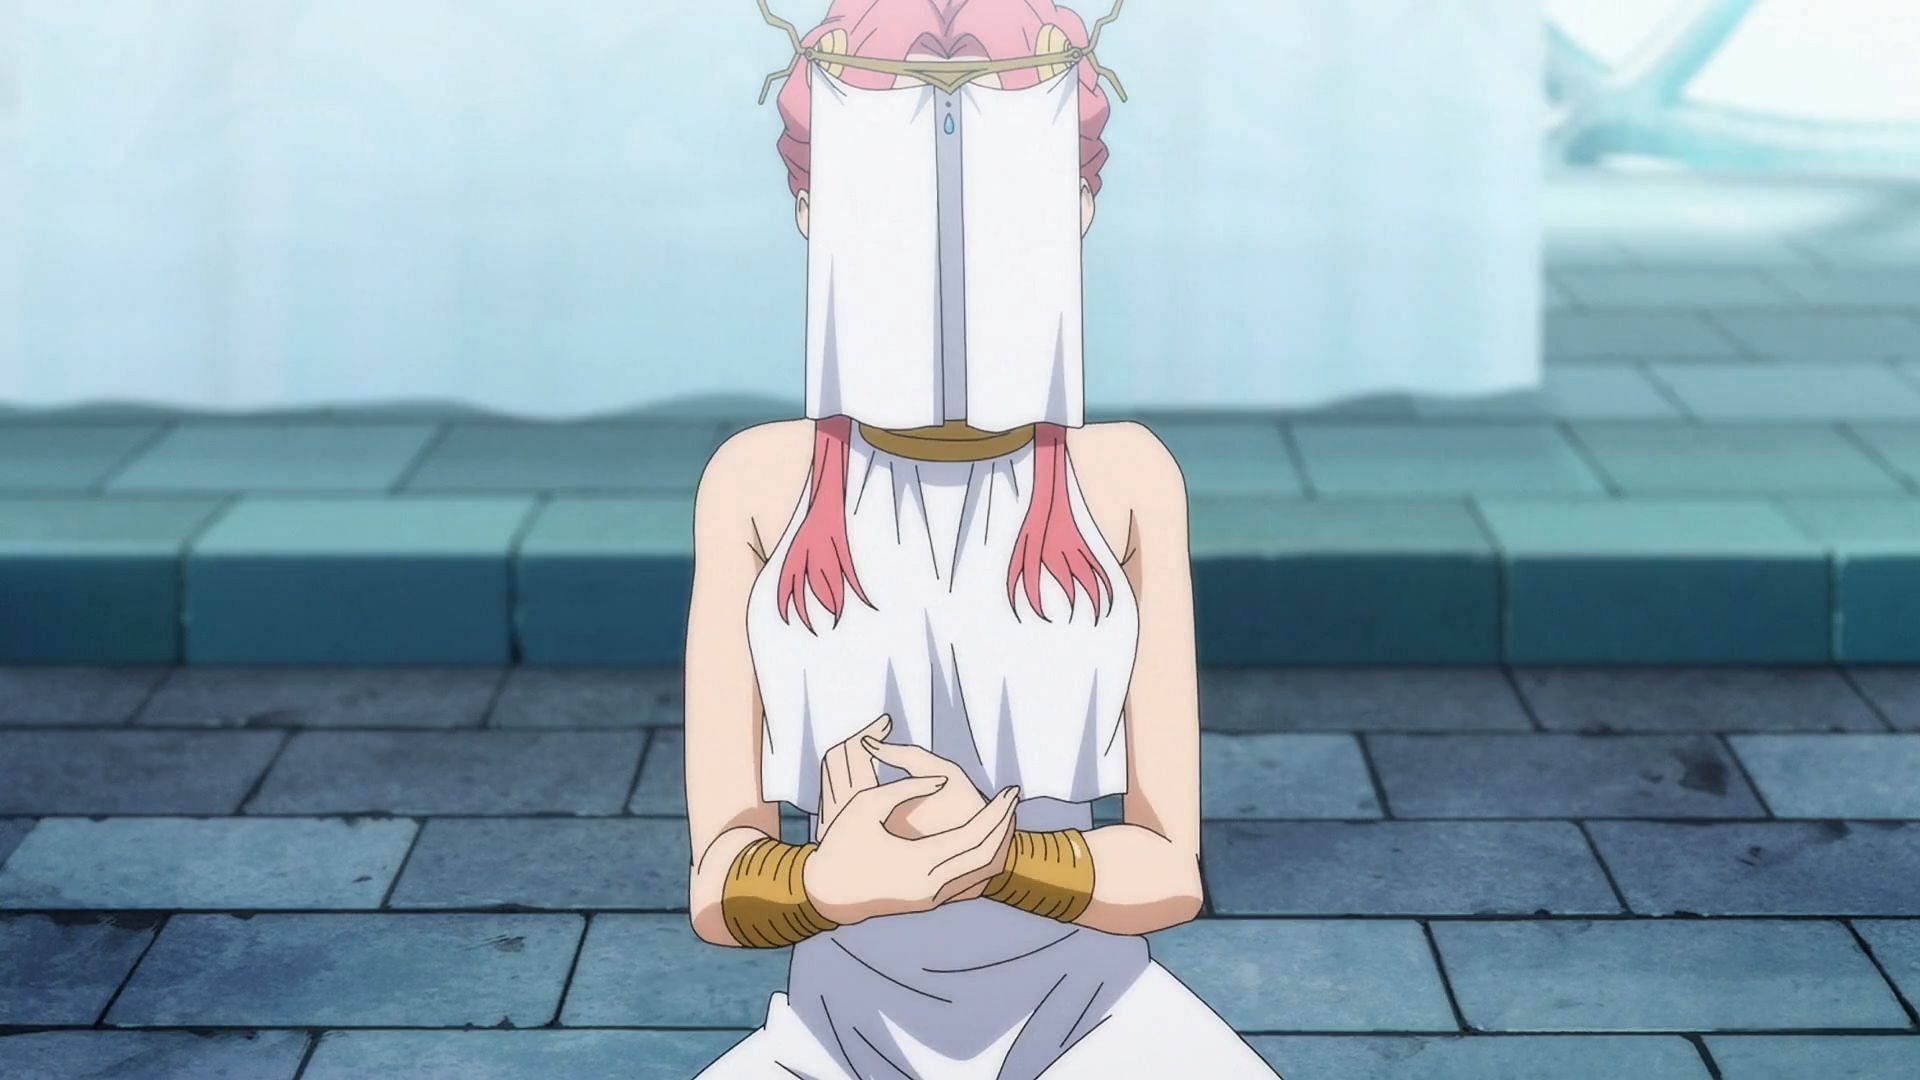 Princess Arume as seen in the anime (Image via Studio Drive)